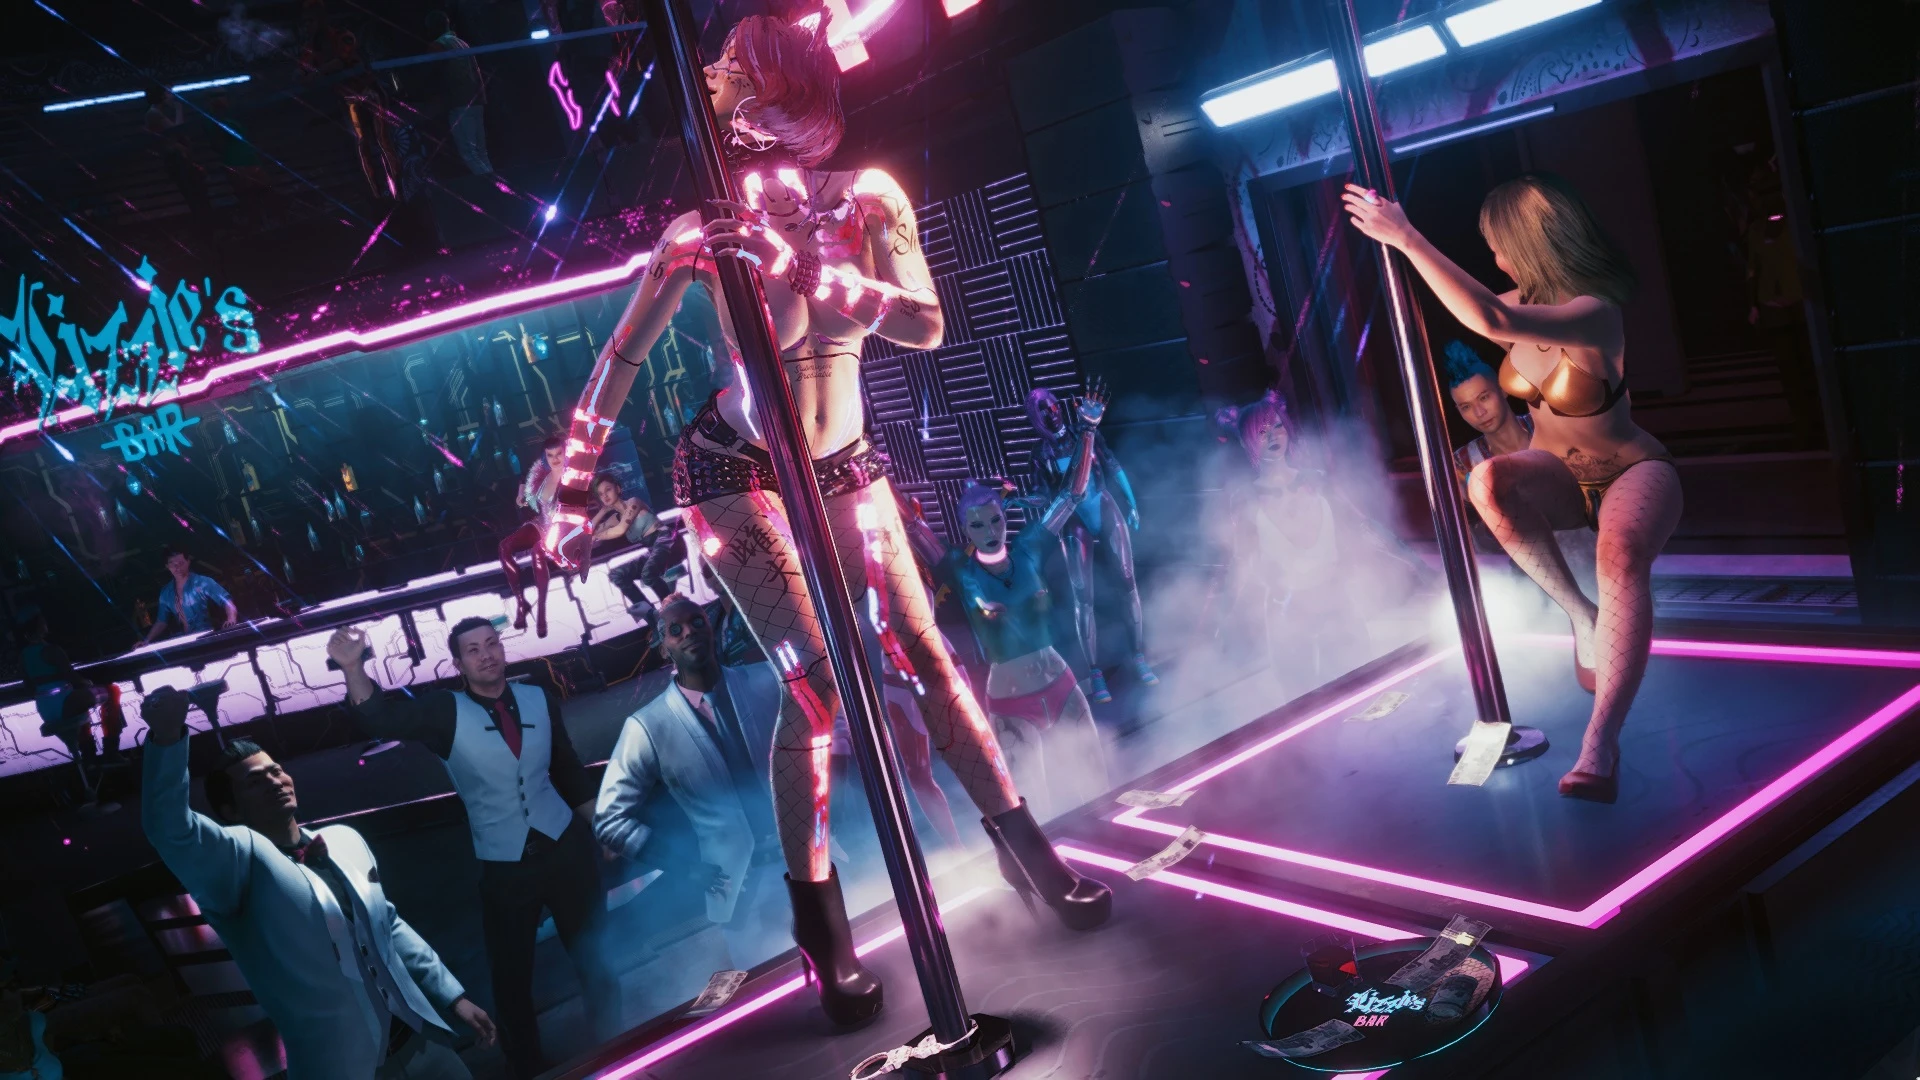 Cyberpunk strip clubs